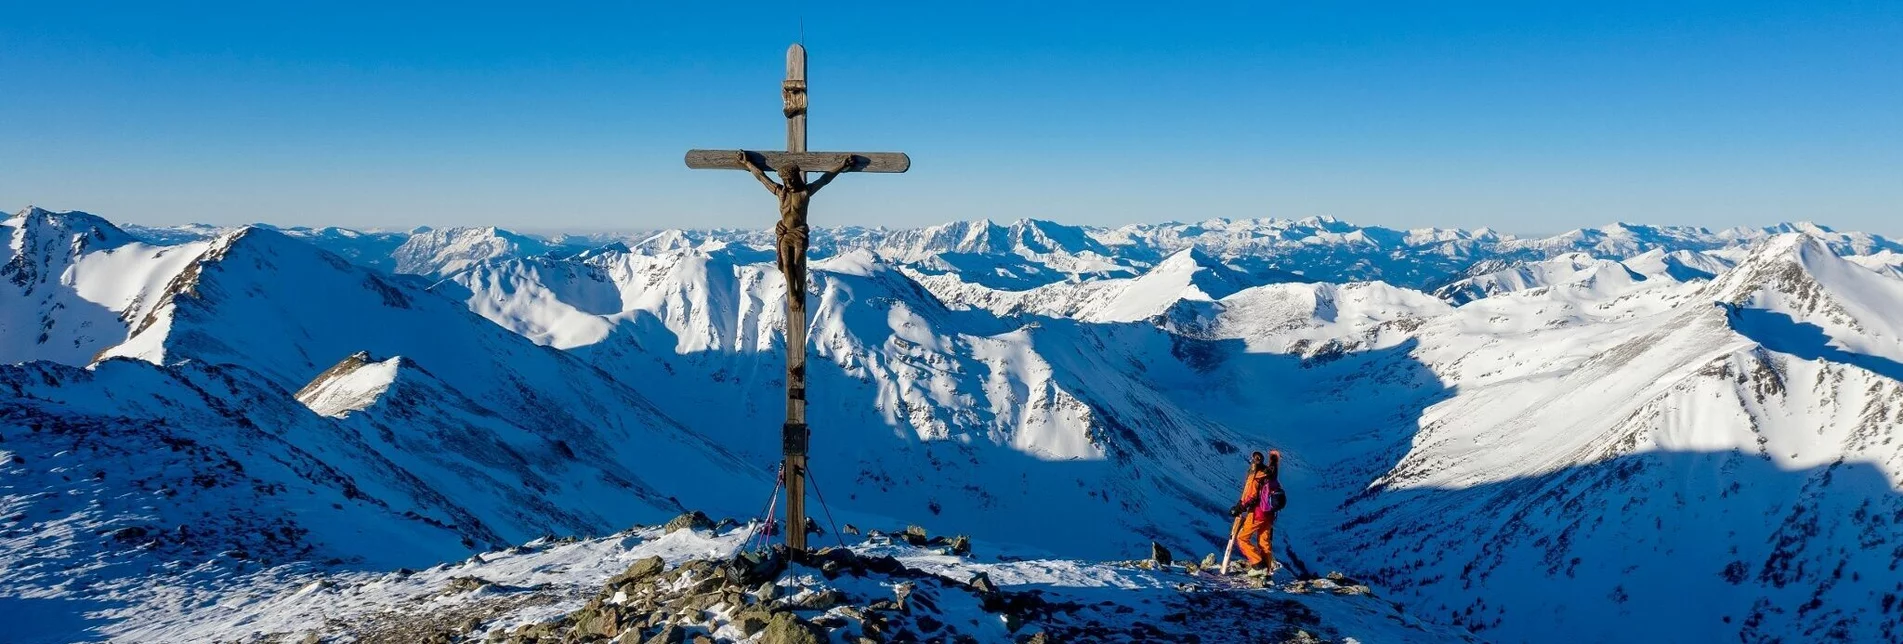 Skitour Röst-Zirbeneck-Greim - Touren-Impression #1 | © Tourismusverband Region Murau